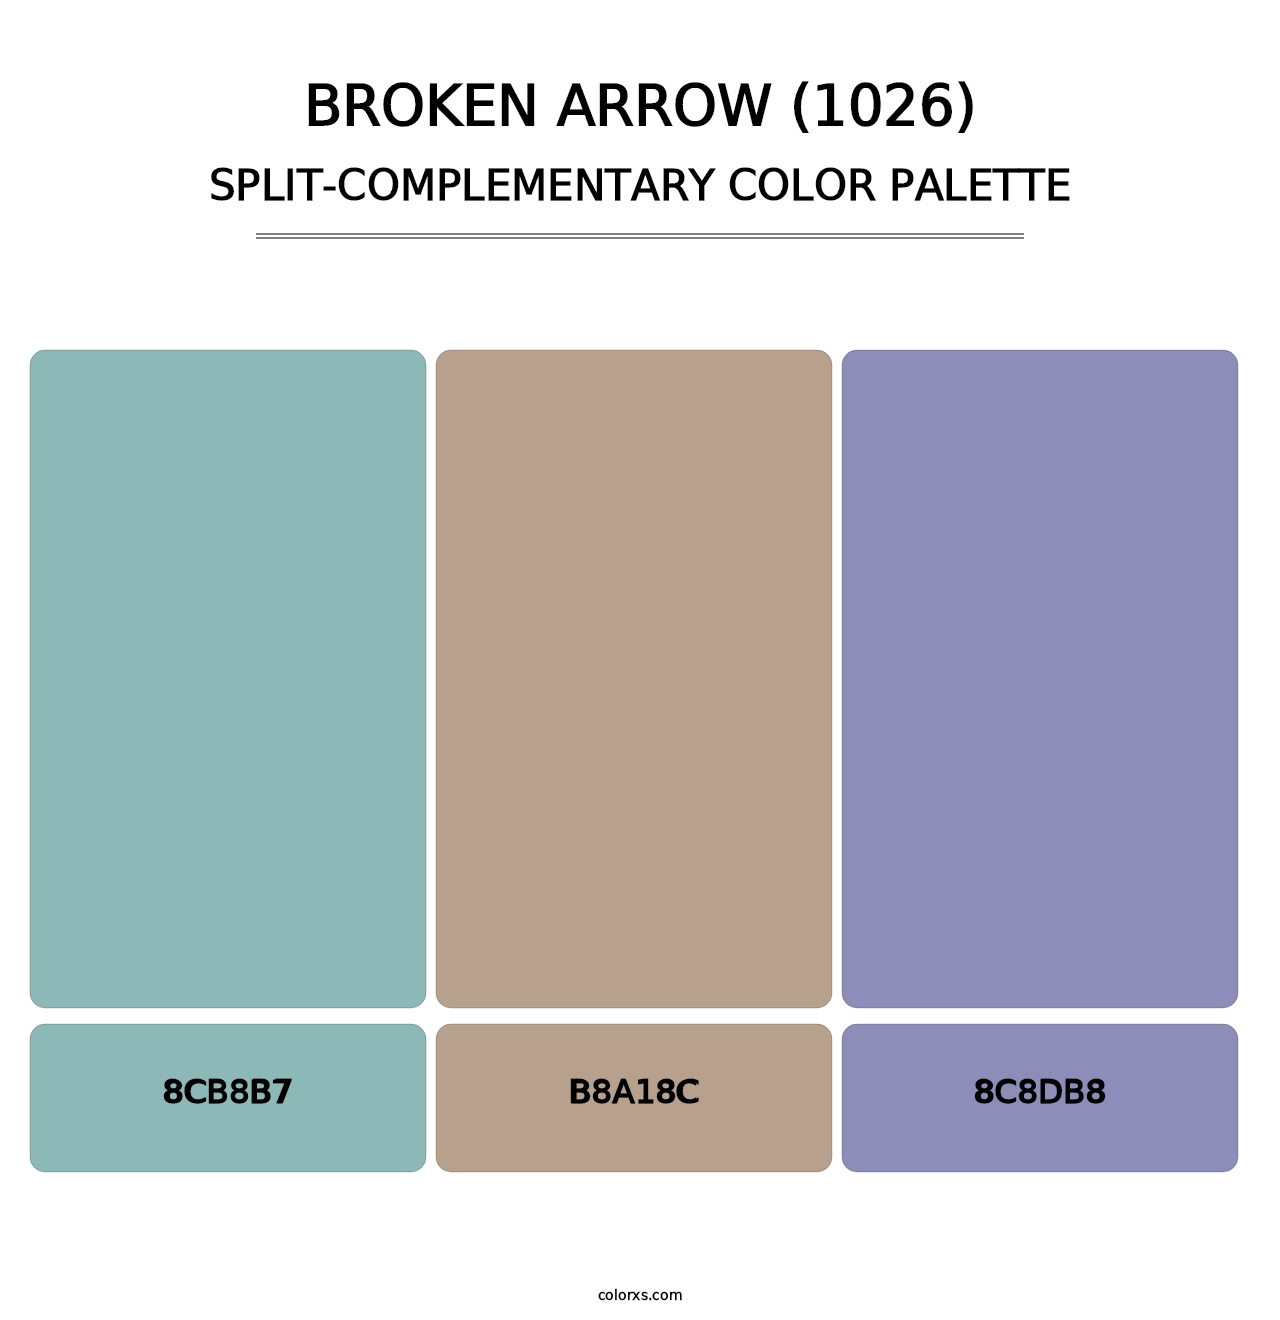 Broken Arrow (1026) - Split-Complementary Color Palette